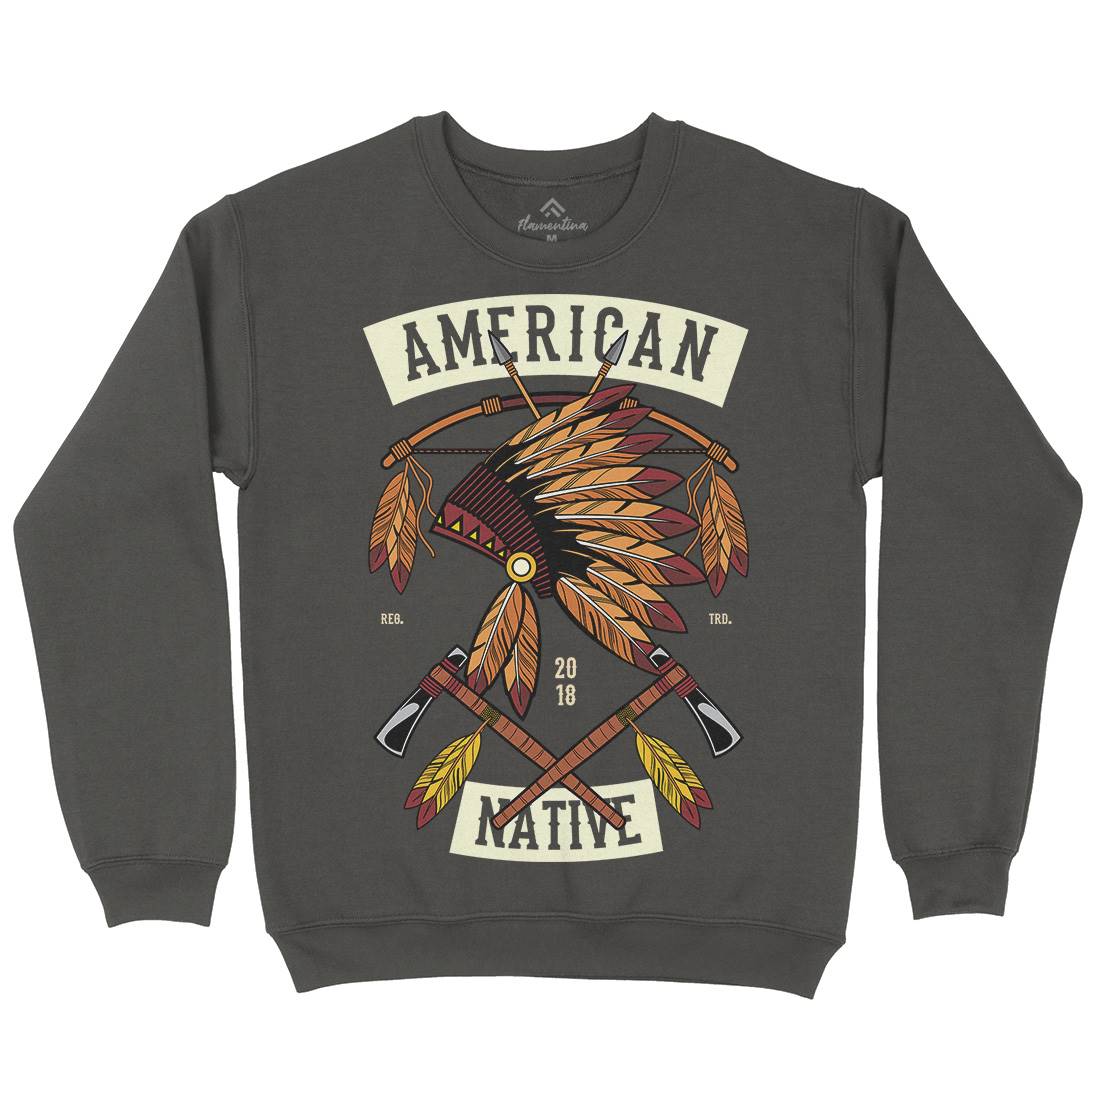 American Native Kids Crew Neck Sweatshirt American C303